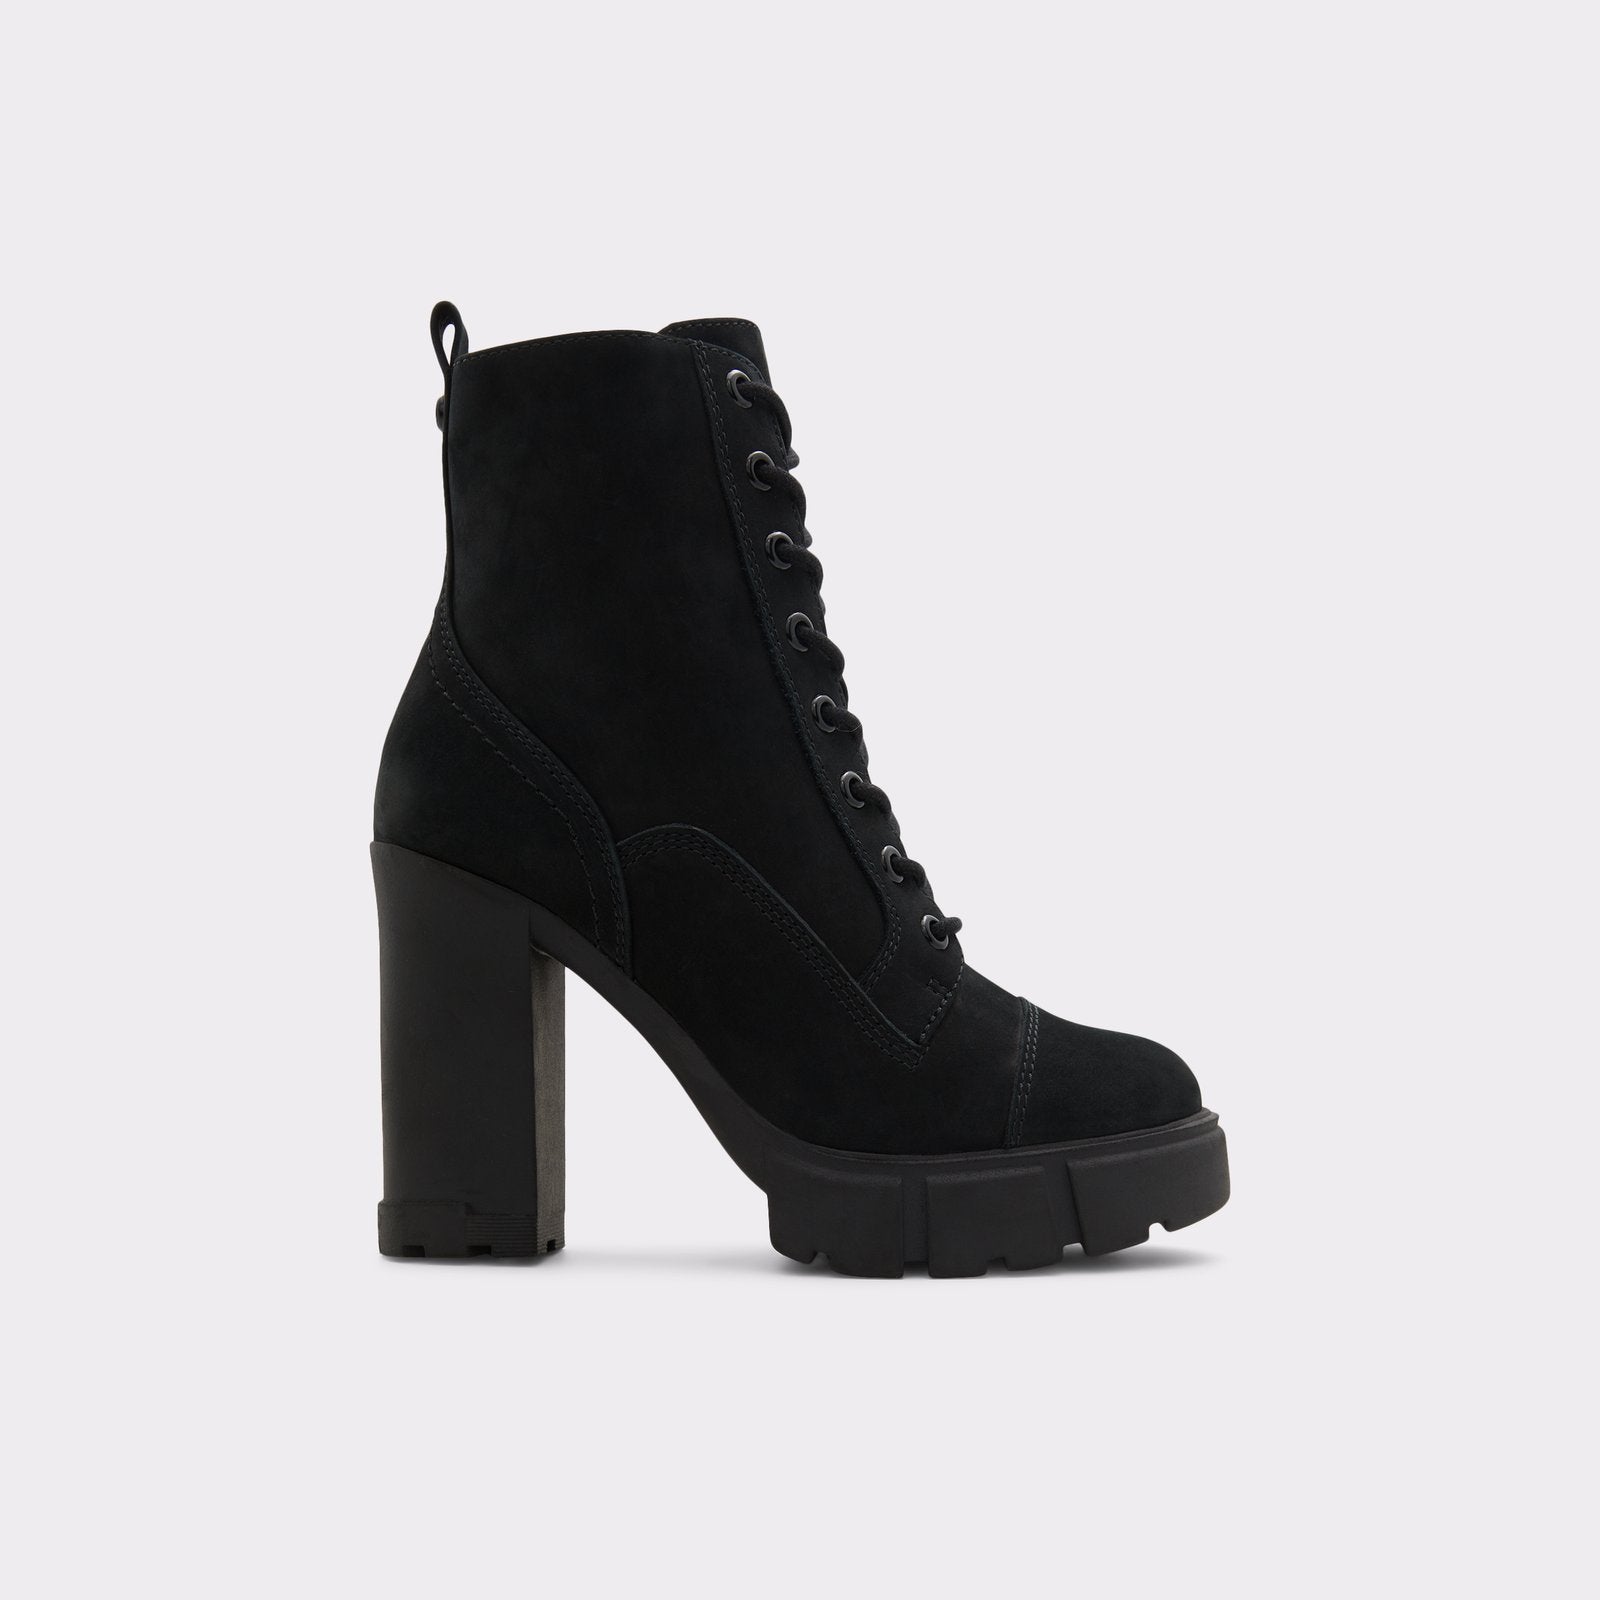 Aldo Women’s Heeled Ankle Boots Rebel2.0 (Black)